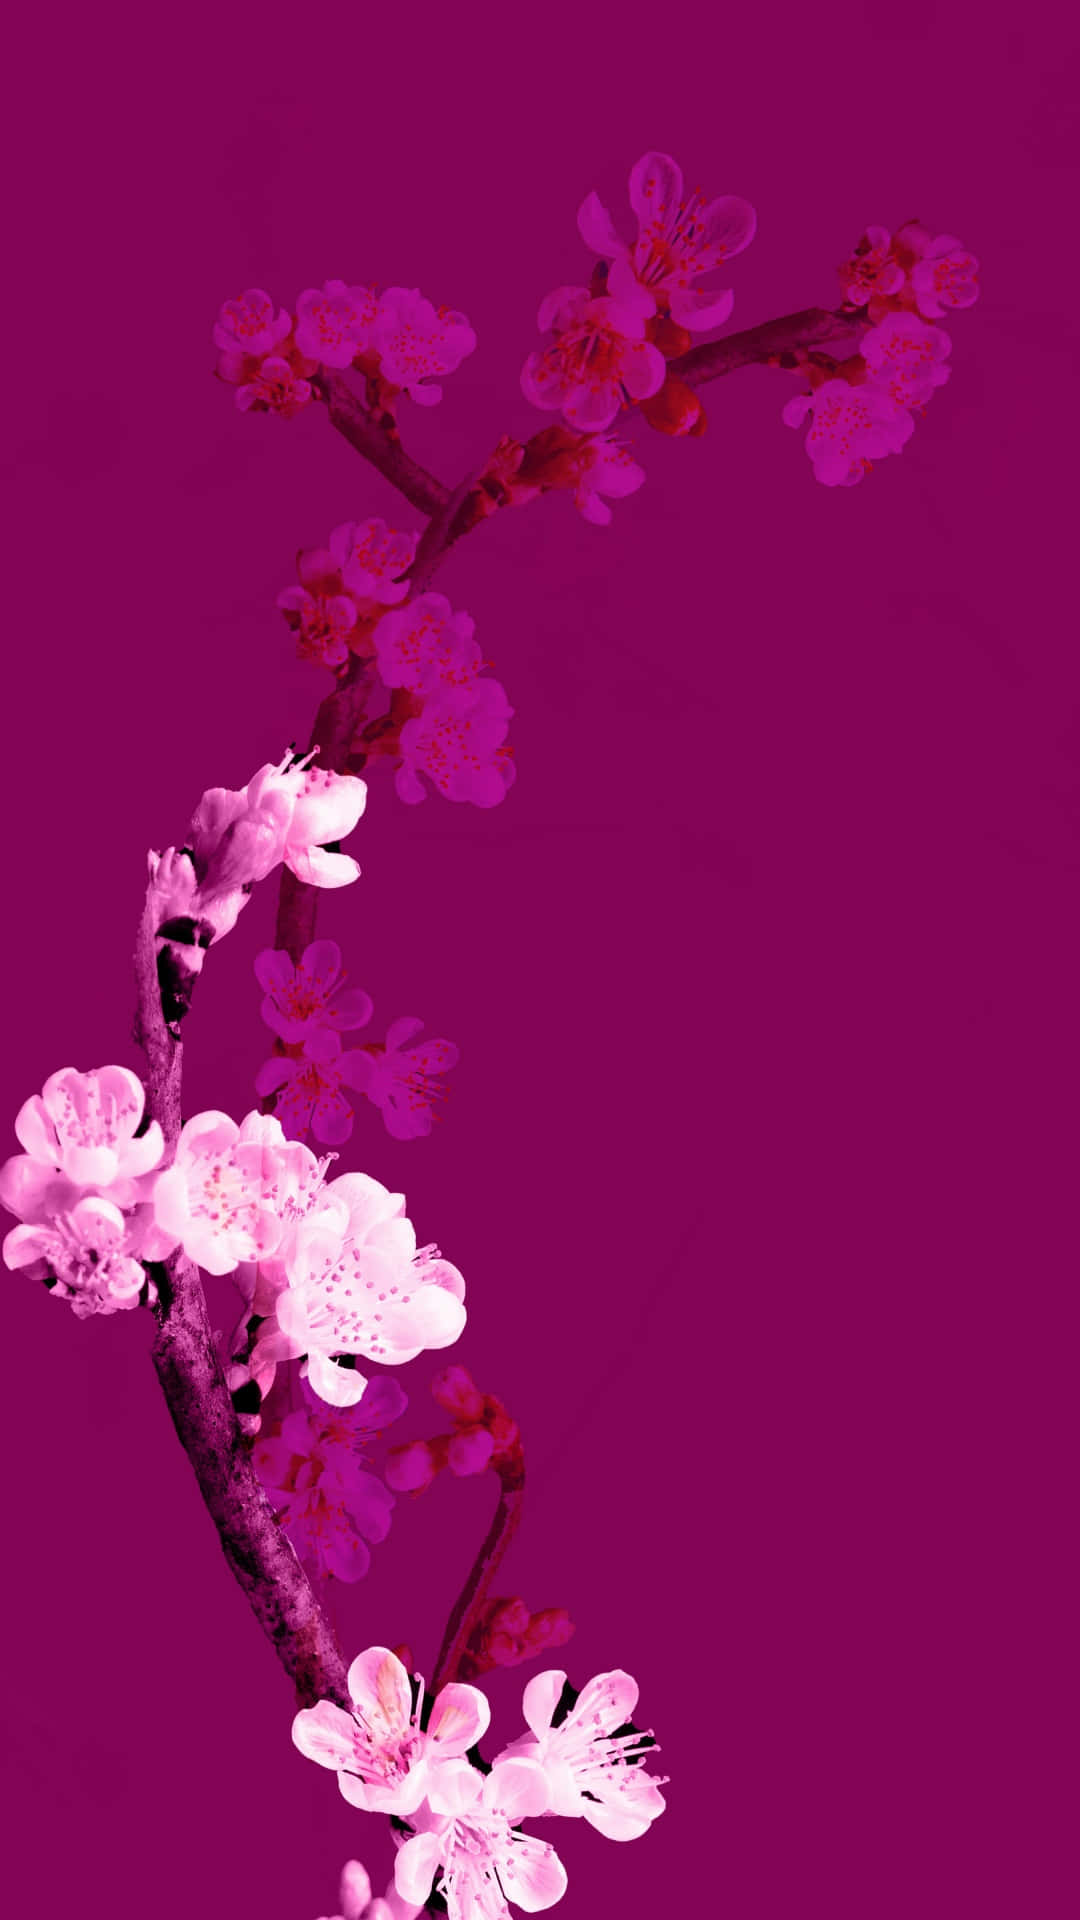 Vibrant Pink Cherry Blossoms Wallpaper